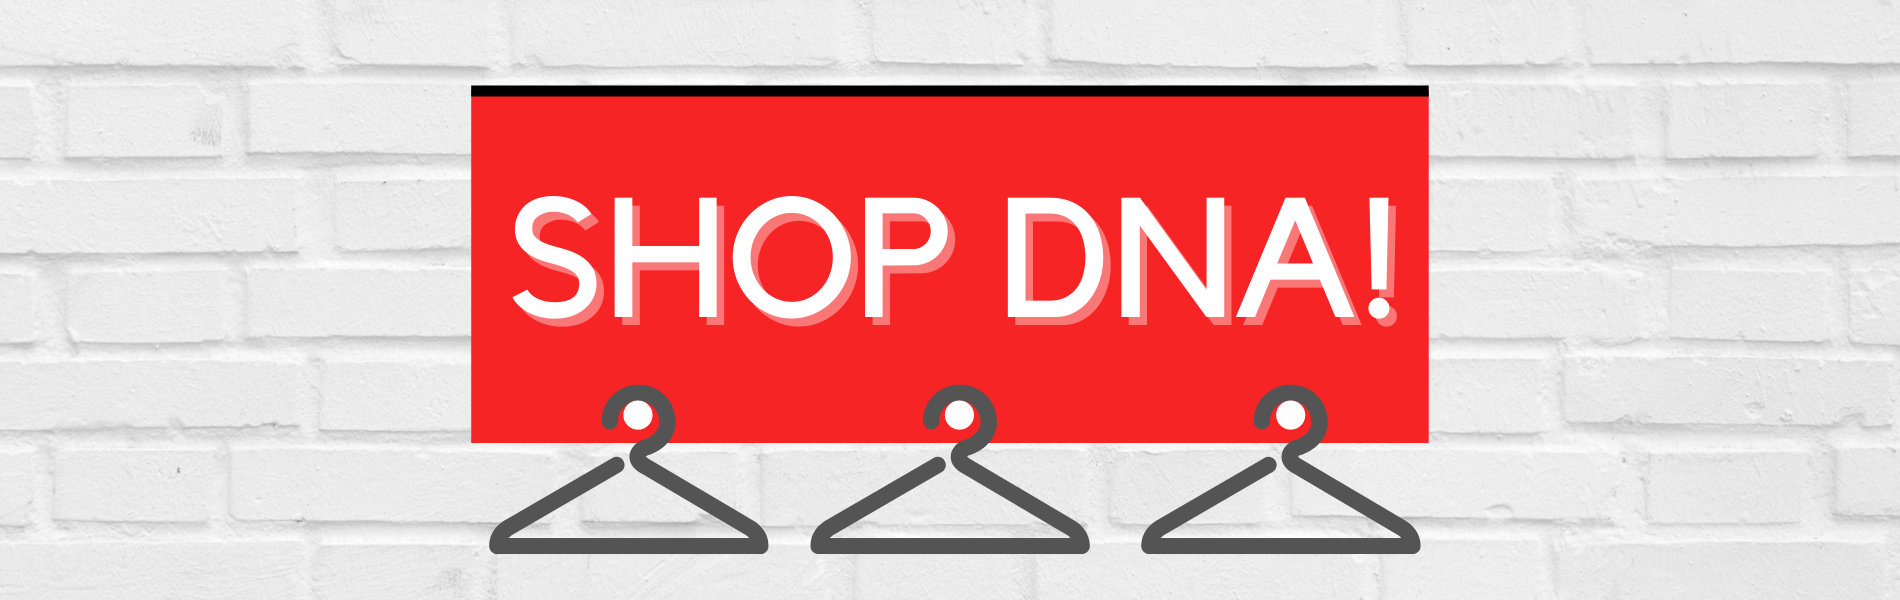 DNA Online store graphic